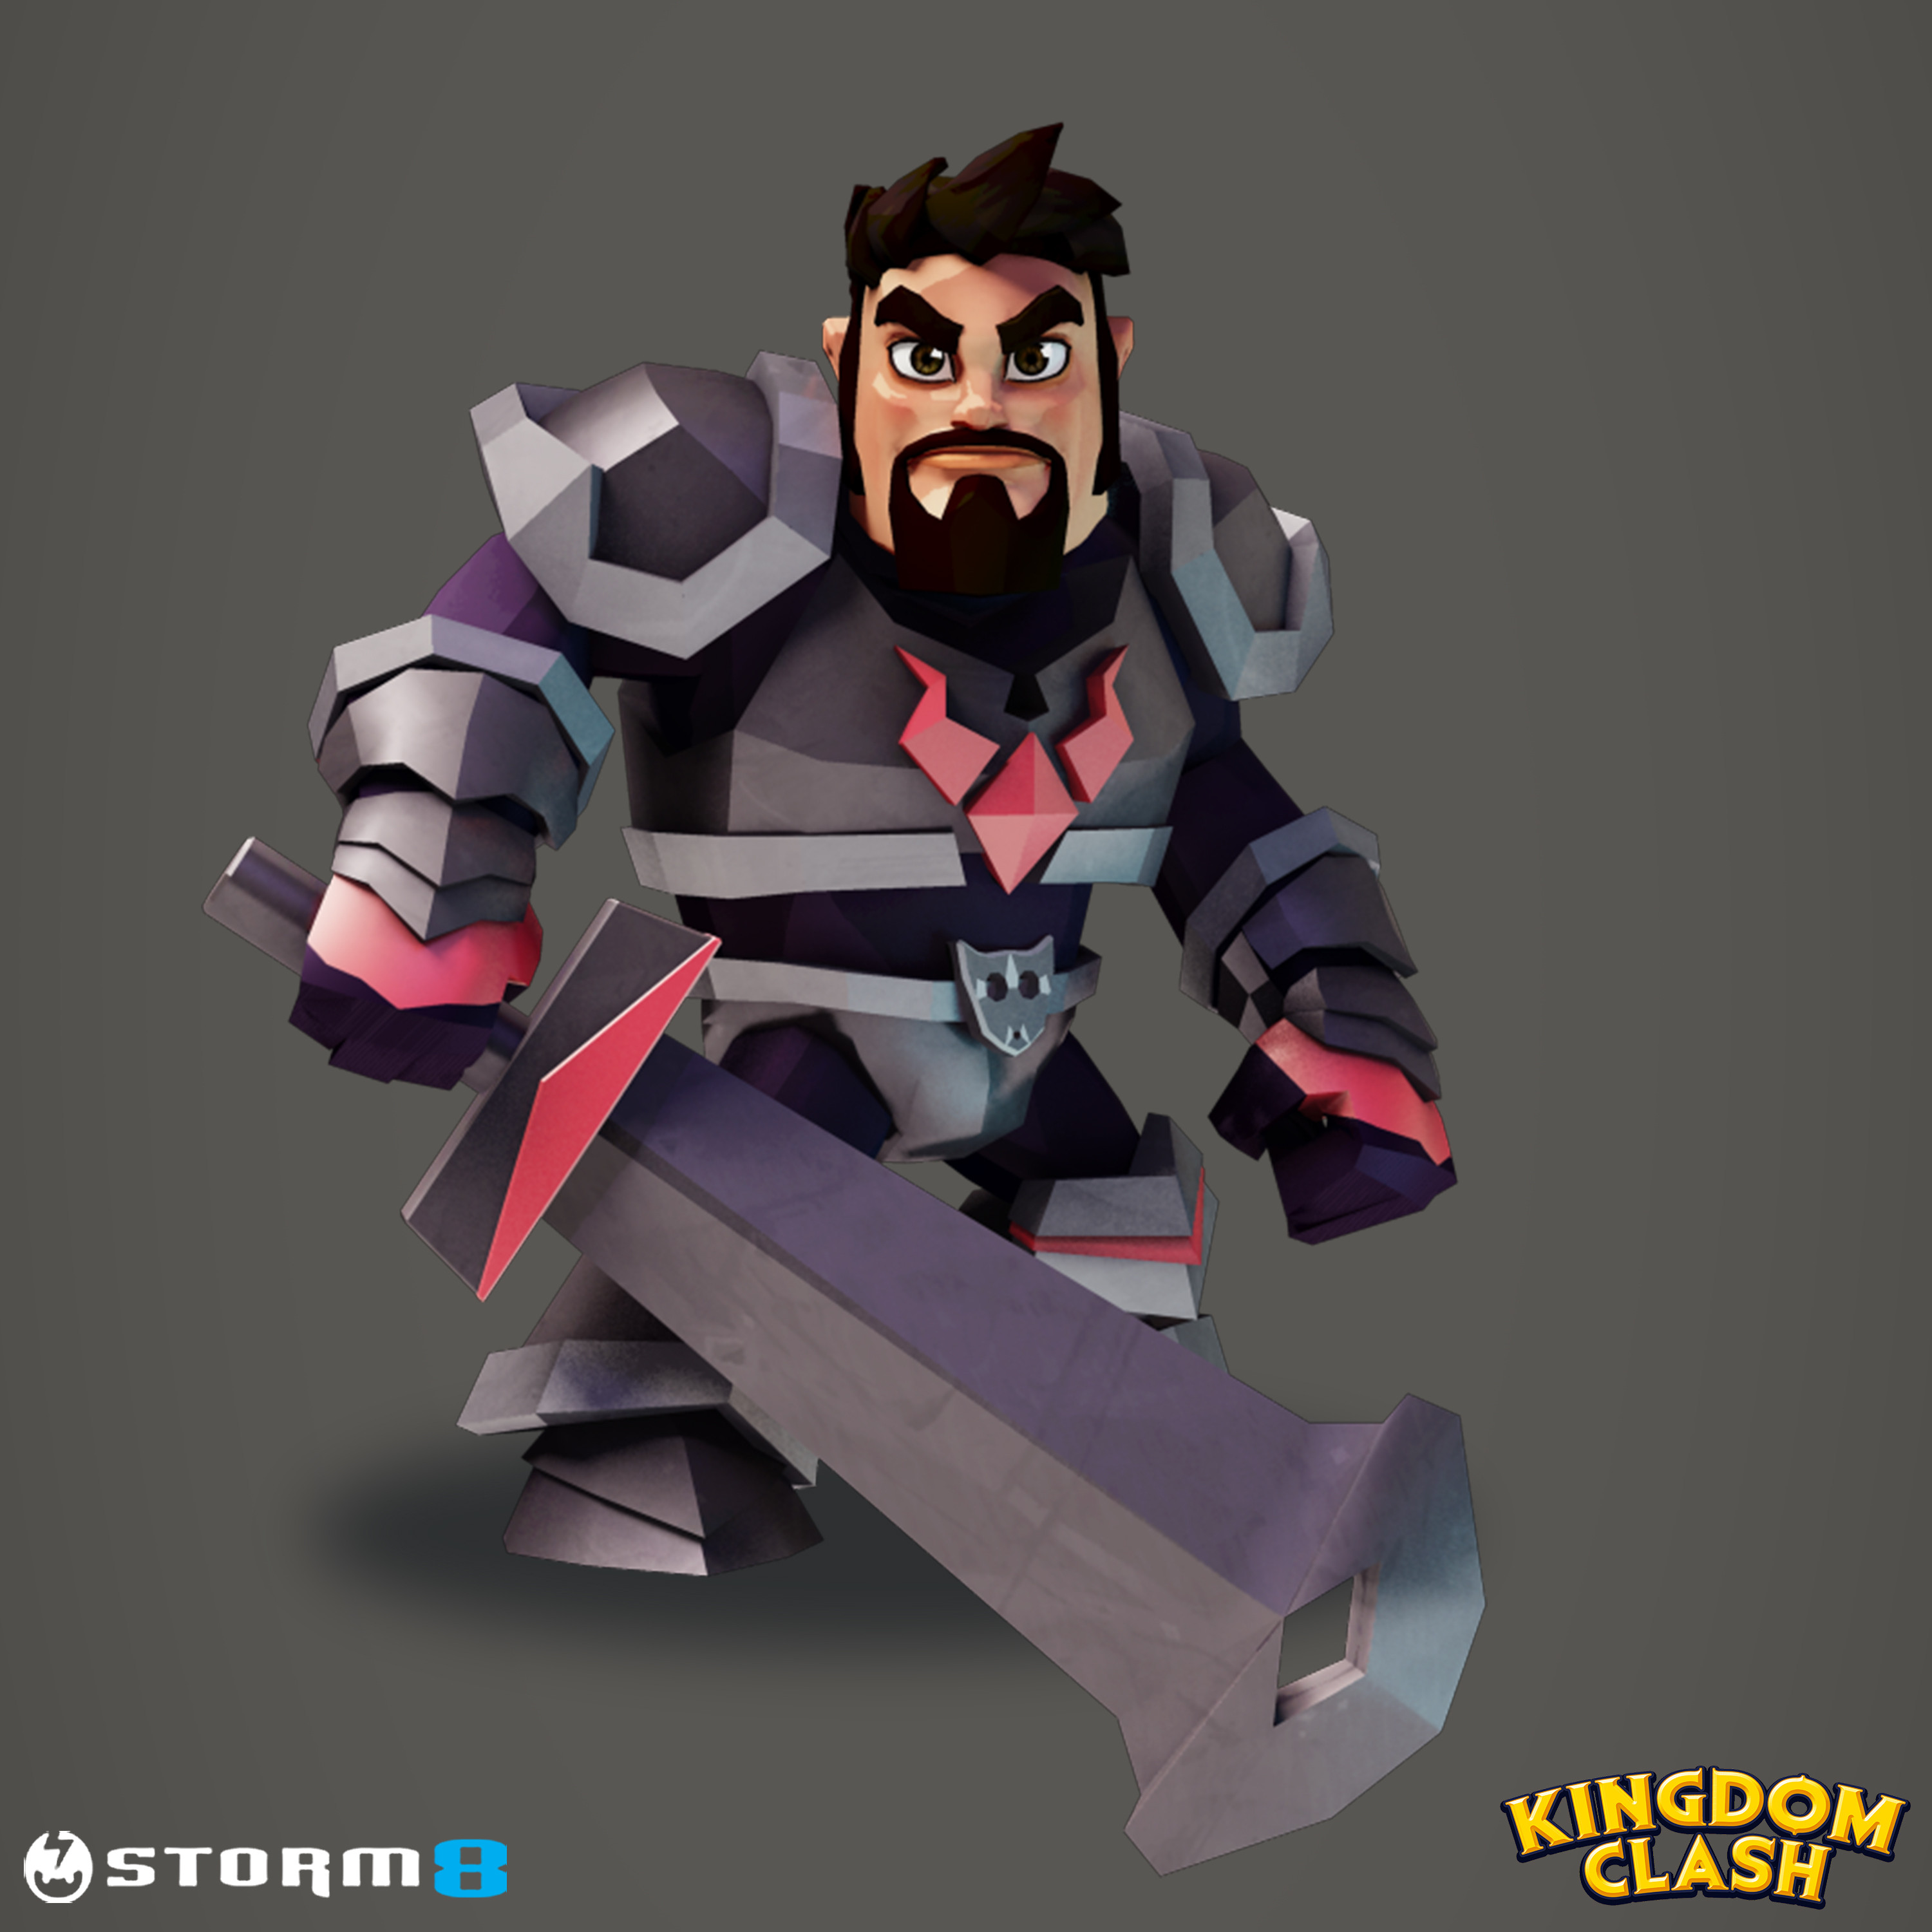 Chris Carranza  3D Artist - Kingdom Clash Characters